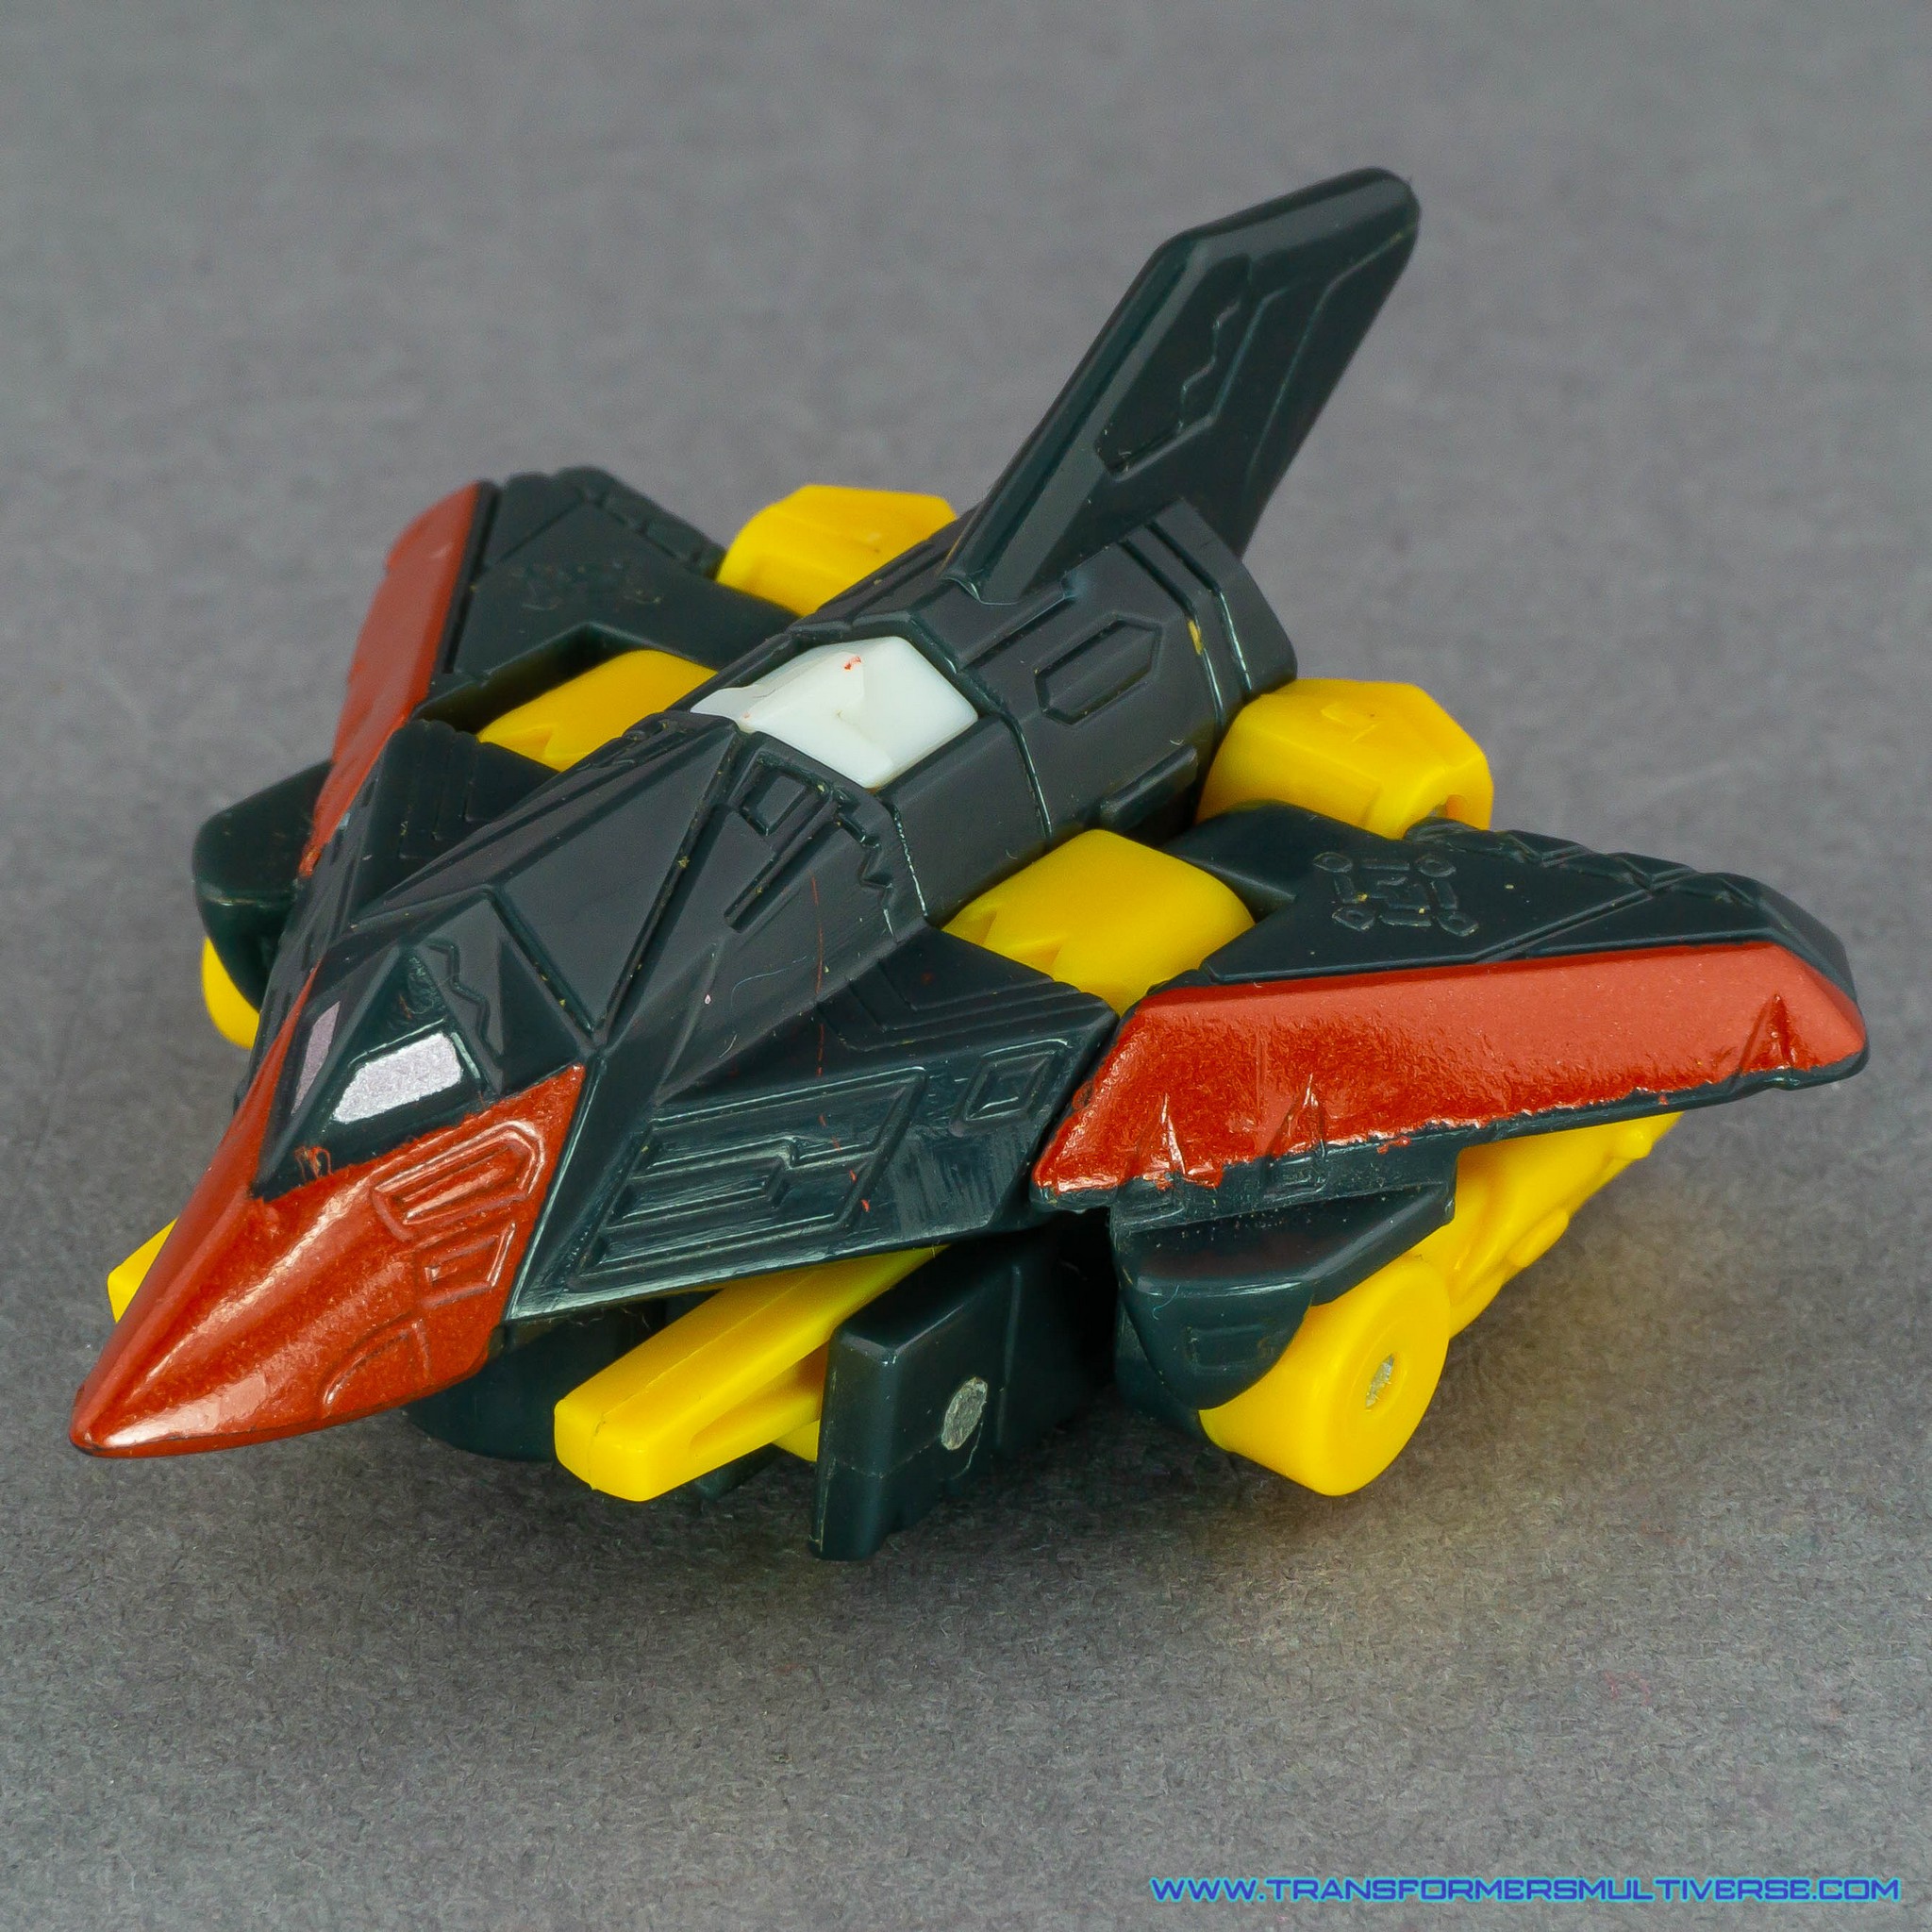 Transformers Armada Windsheer jet mode, alternate angle